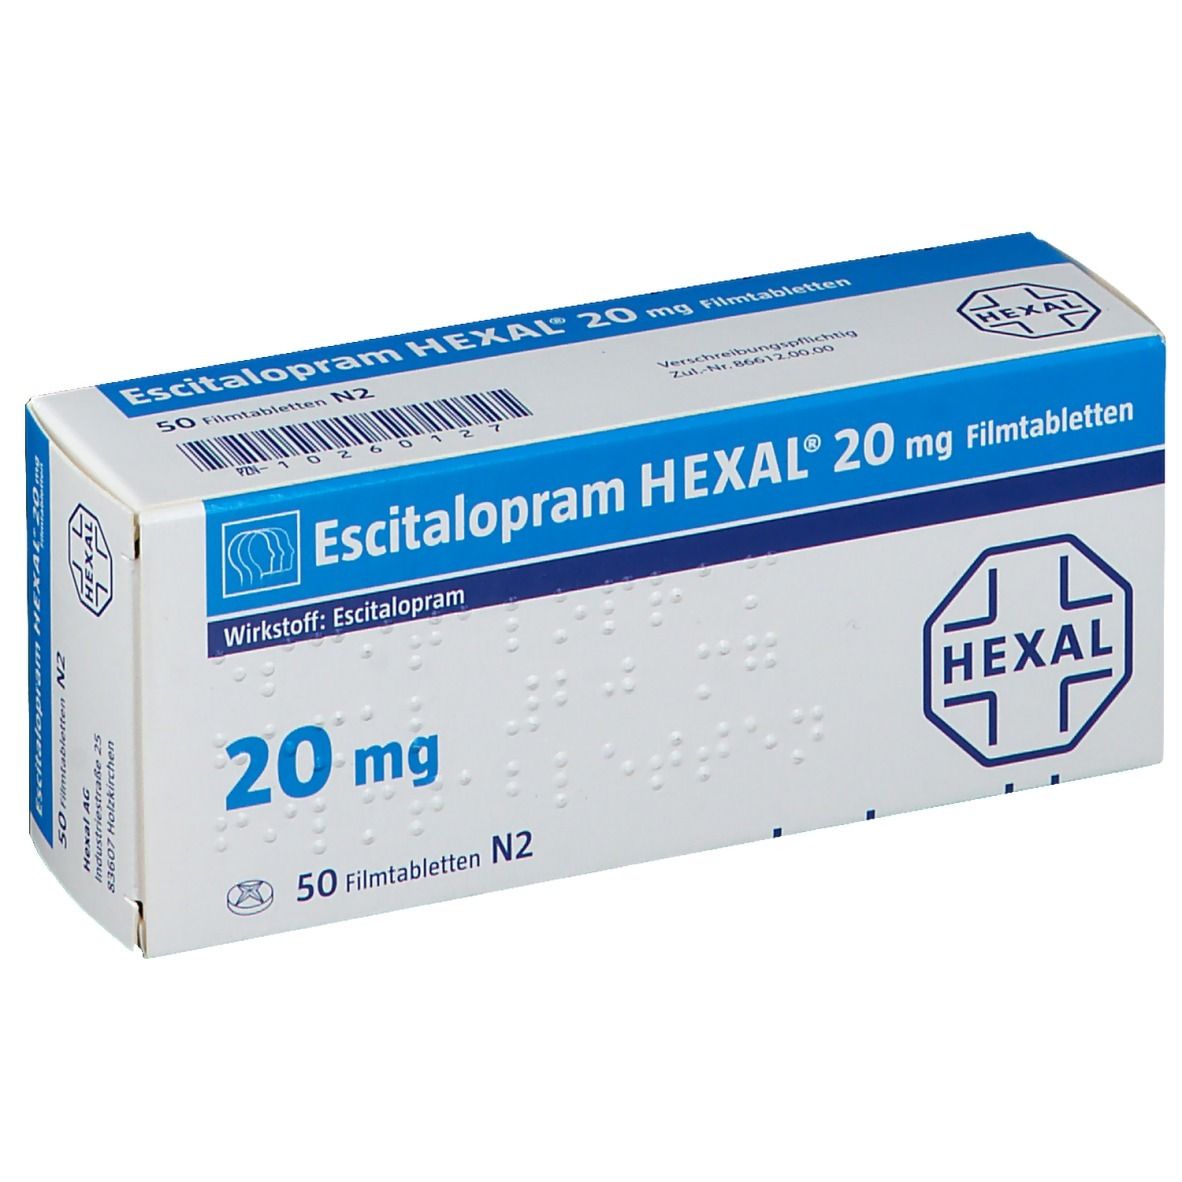 Escitalopram HEXAL® 20 mg Filmtabletten